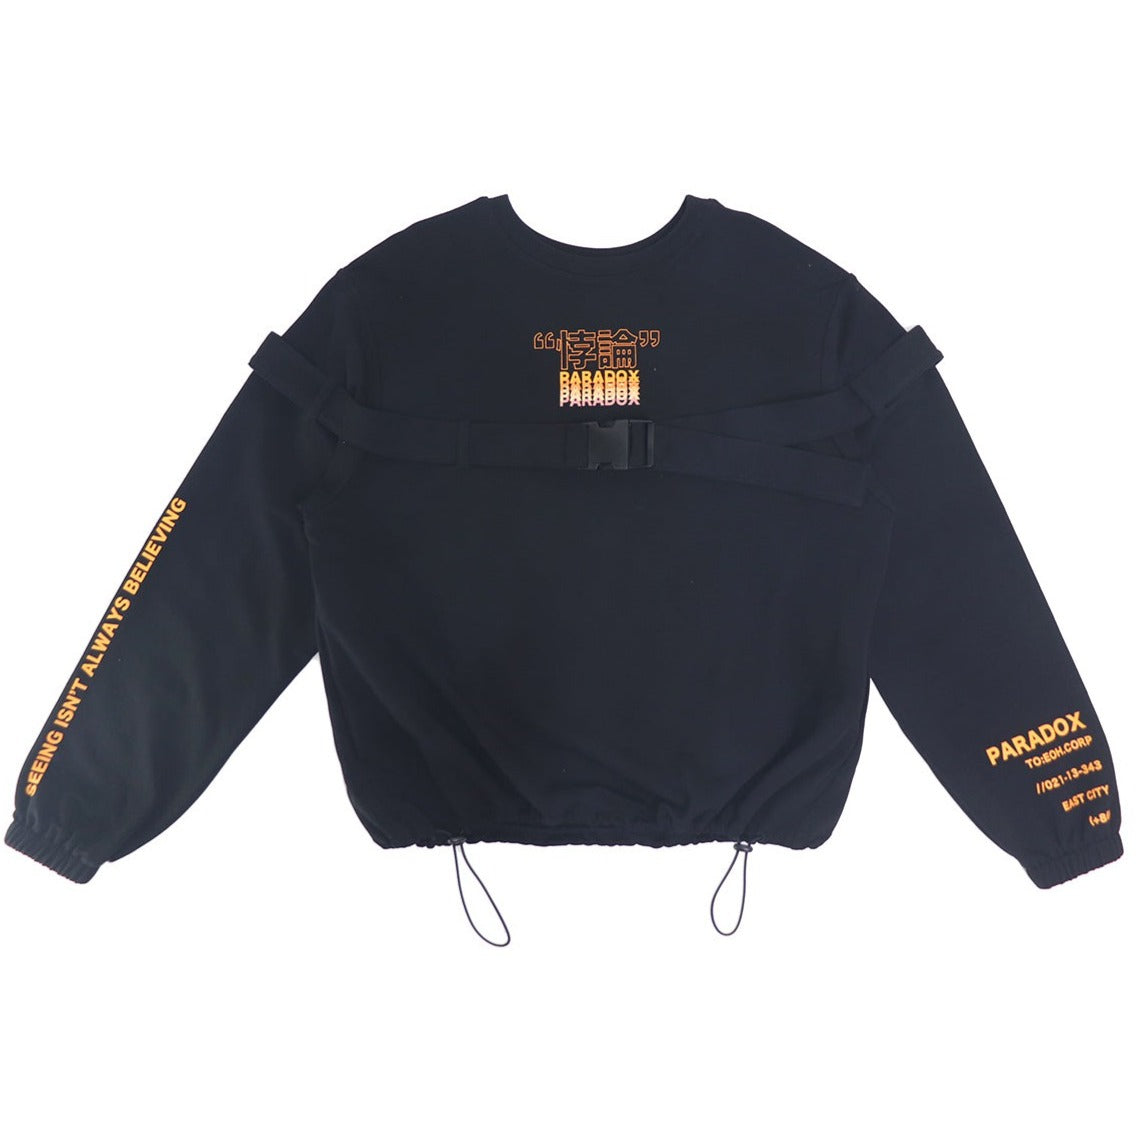 Paradox Leash Sweatshirt - Black / One size - Windbreaker